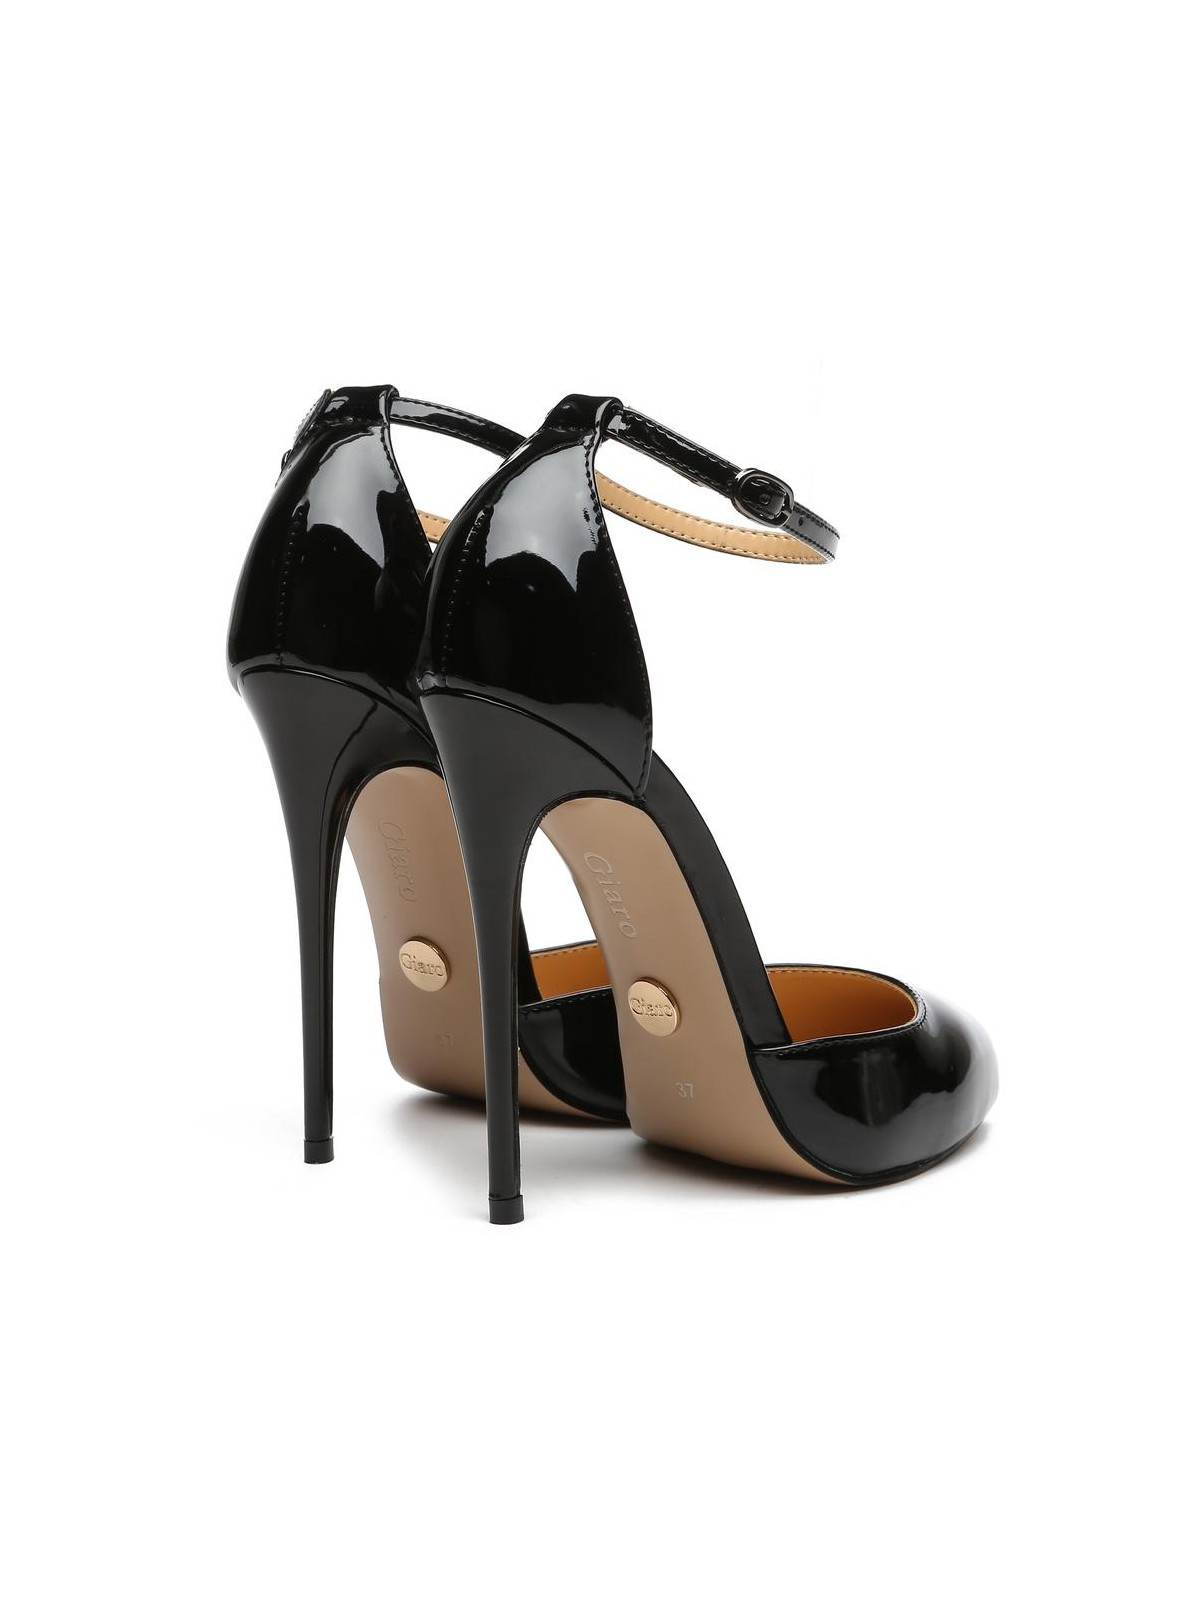 Giaro TAYA BLACK SHINY PUMPS - Giaro High Heels